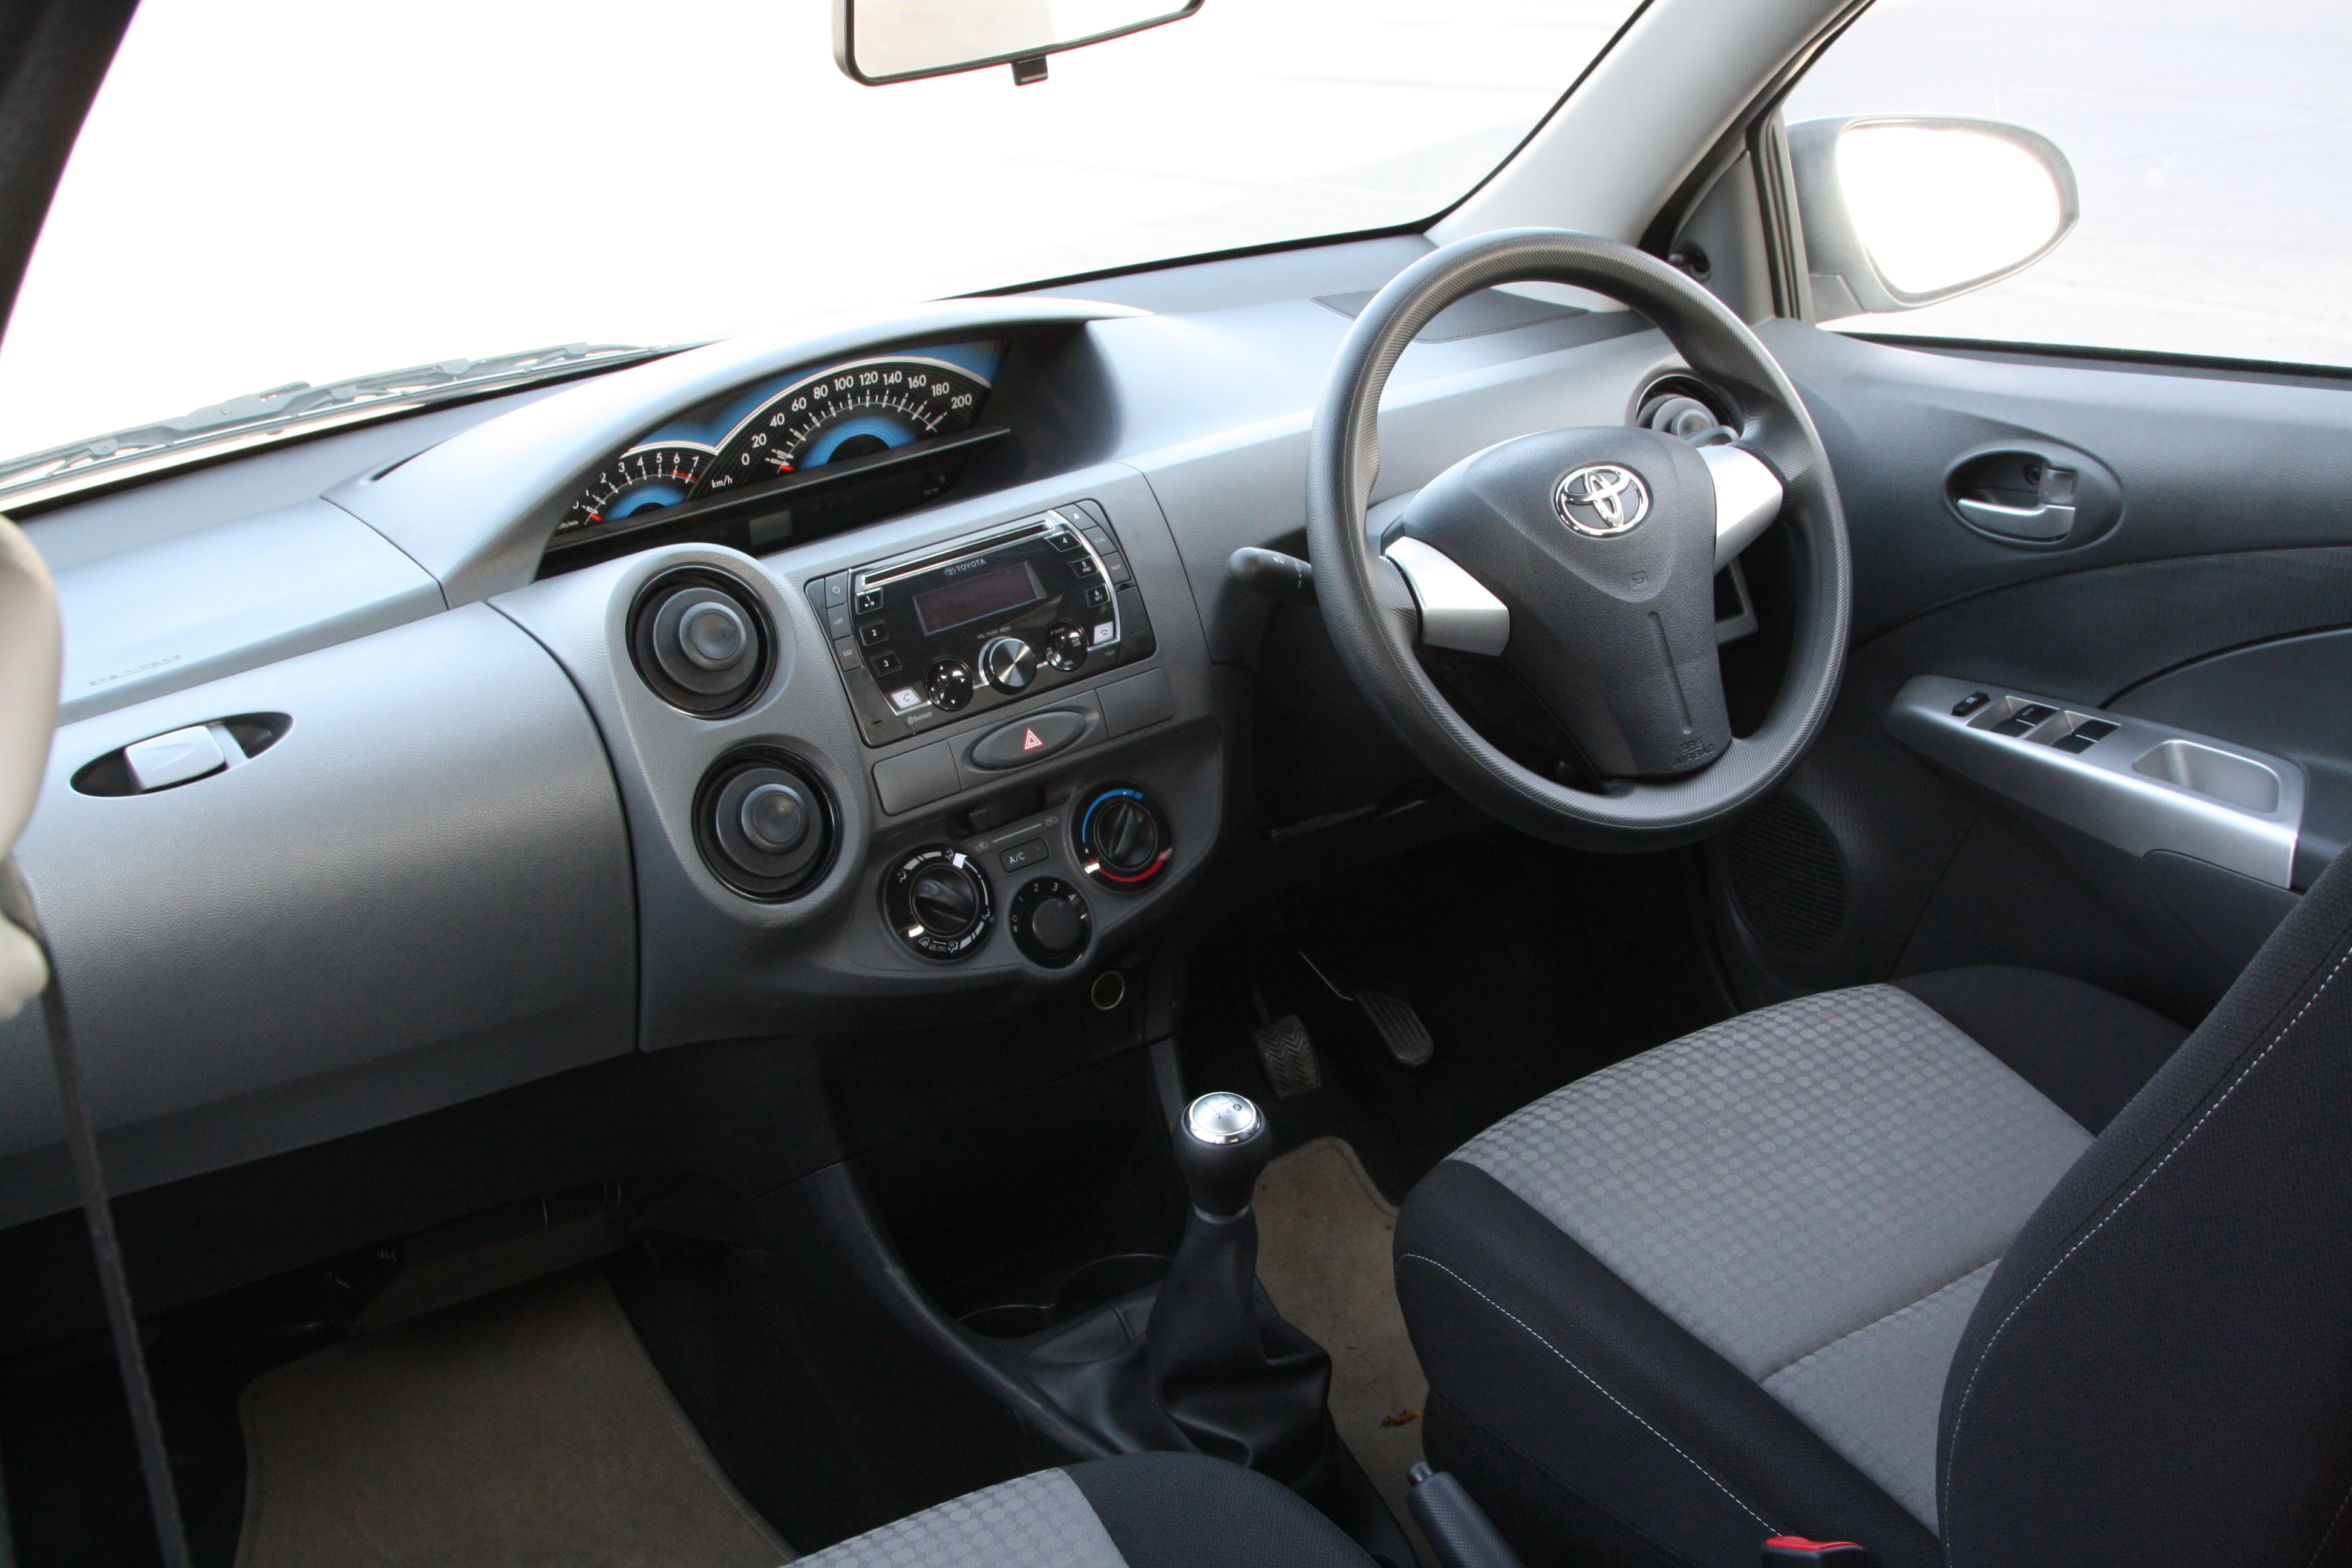 Toyota Etios Liva 2014 Interior Car Photos Overdrive